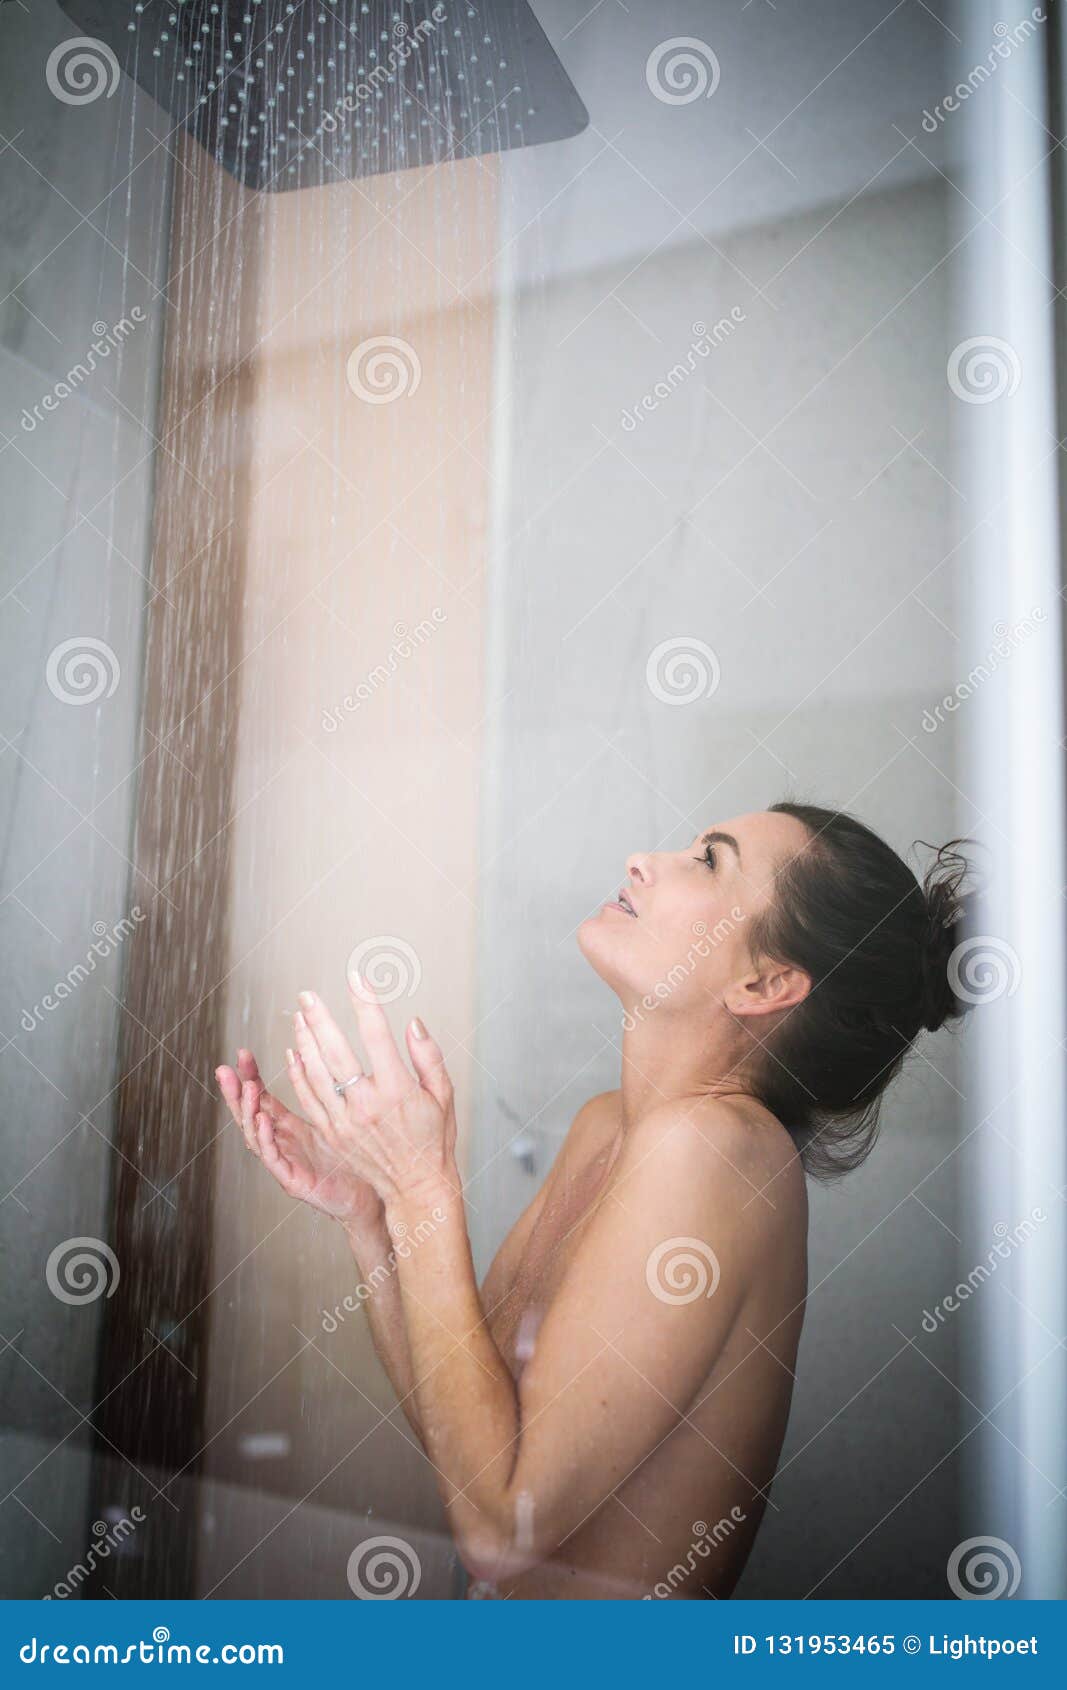 hot women in the shower